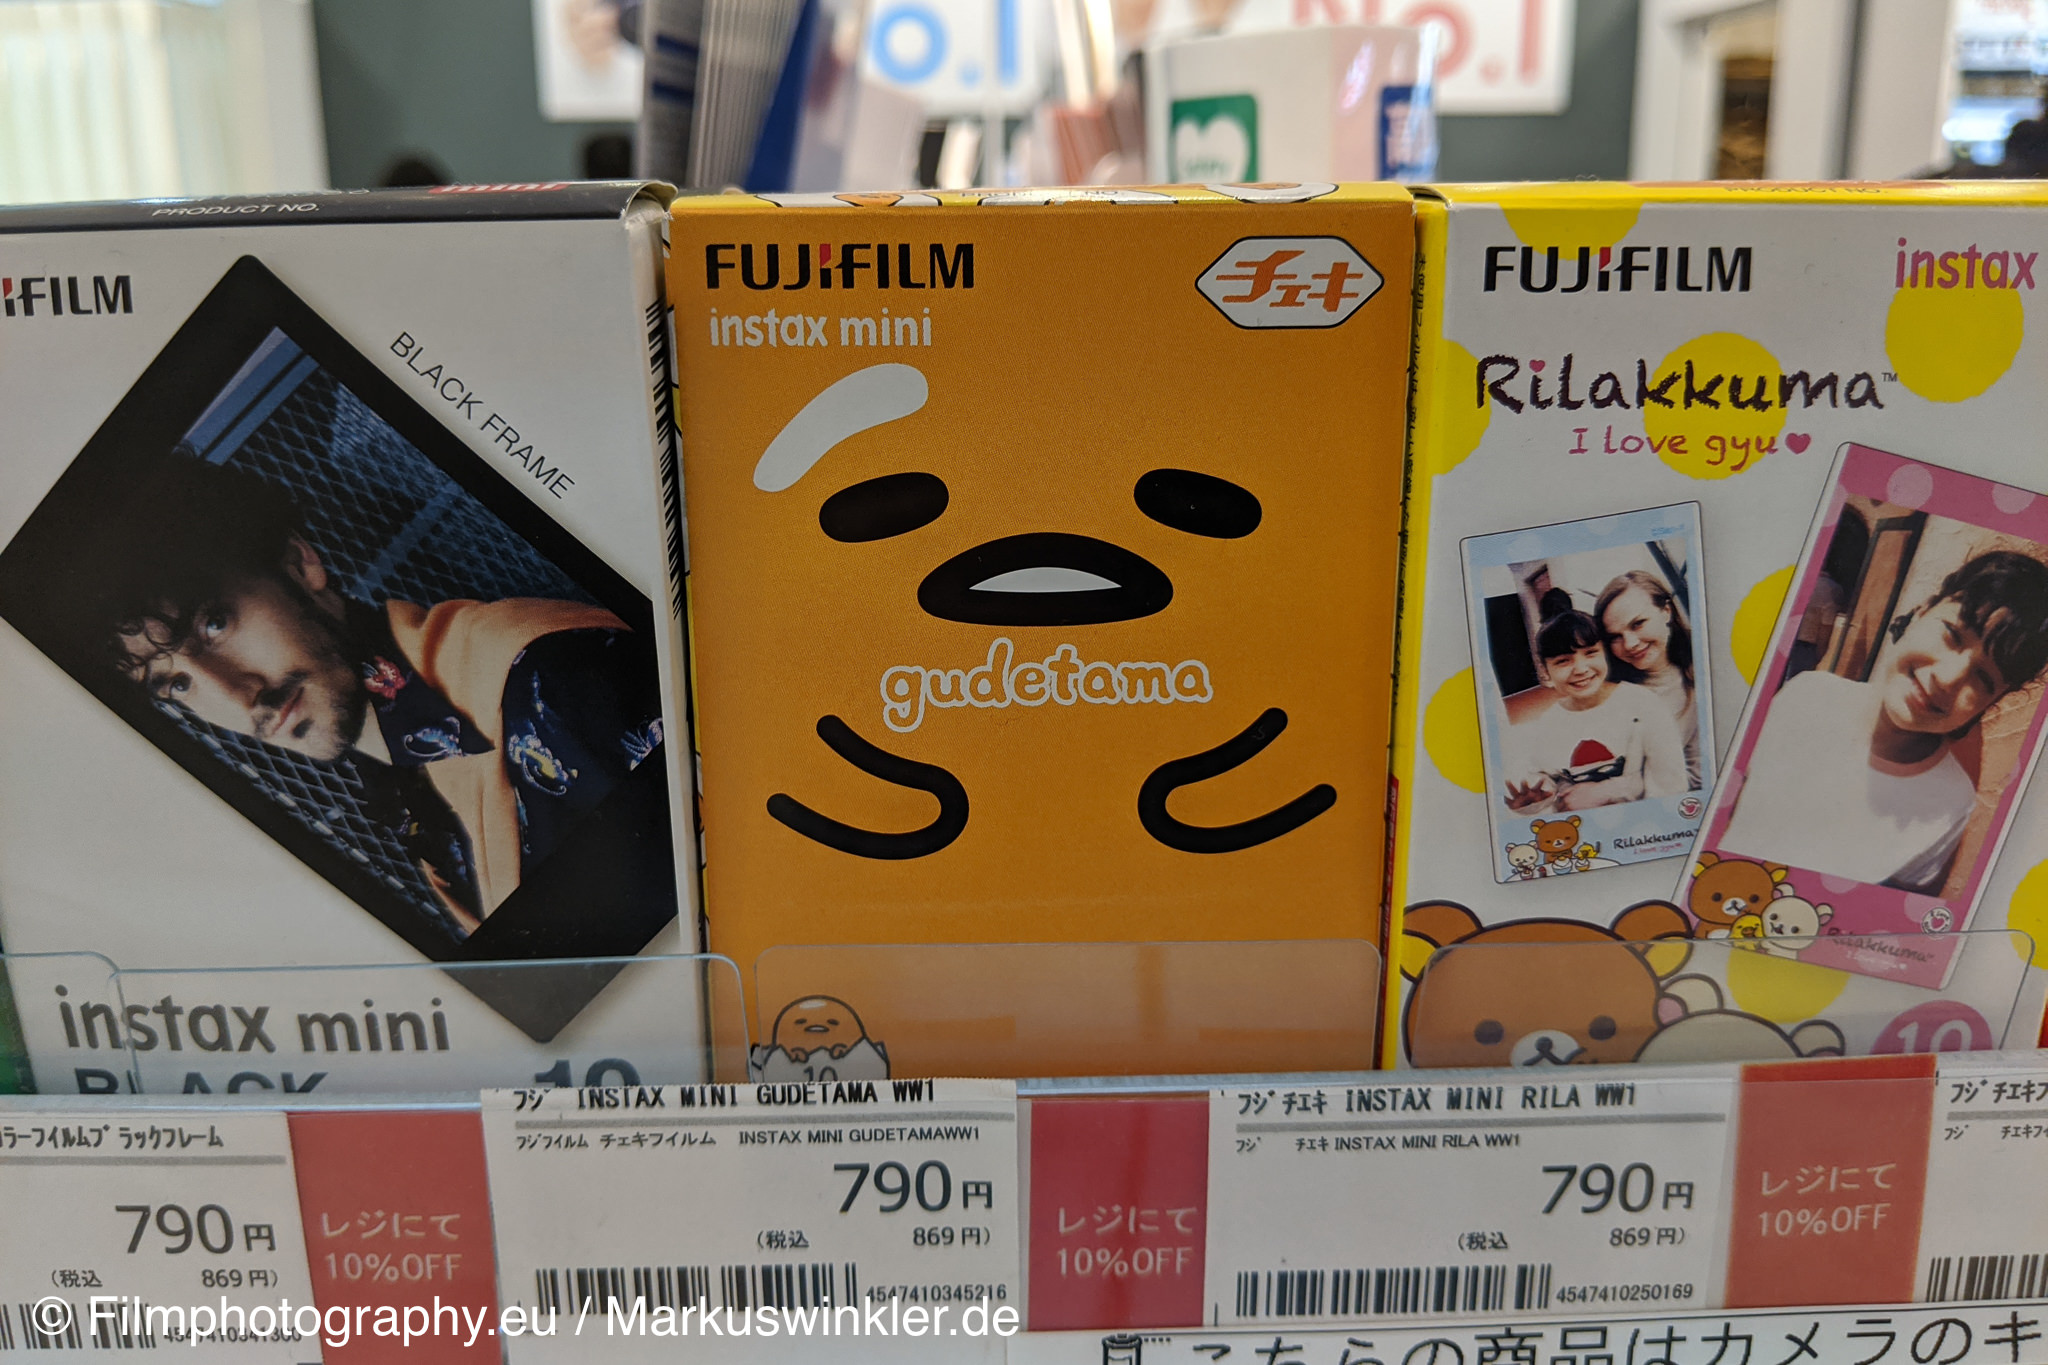 fujifilm-instax-mini-gudetama-japan-edition